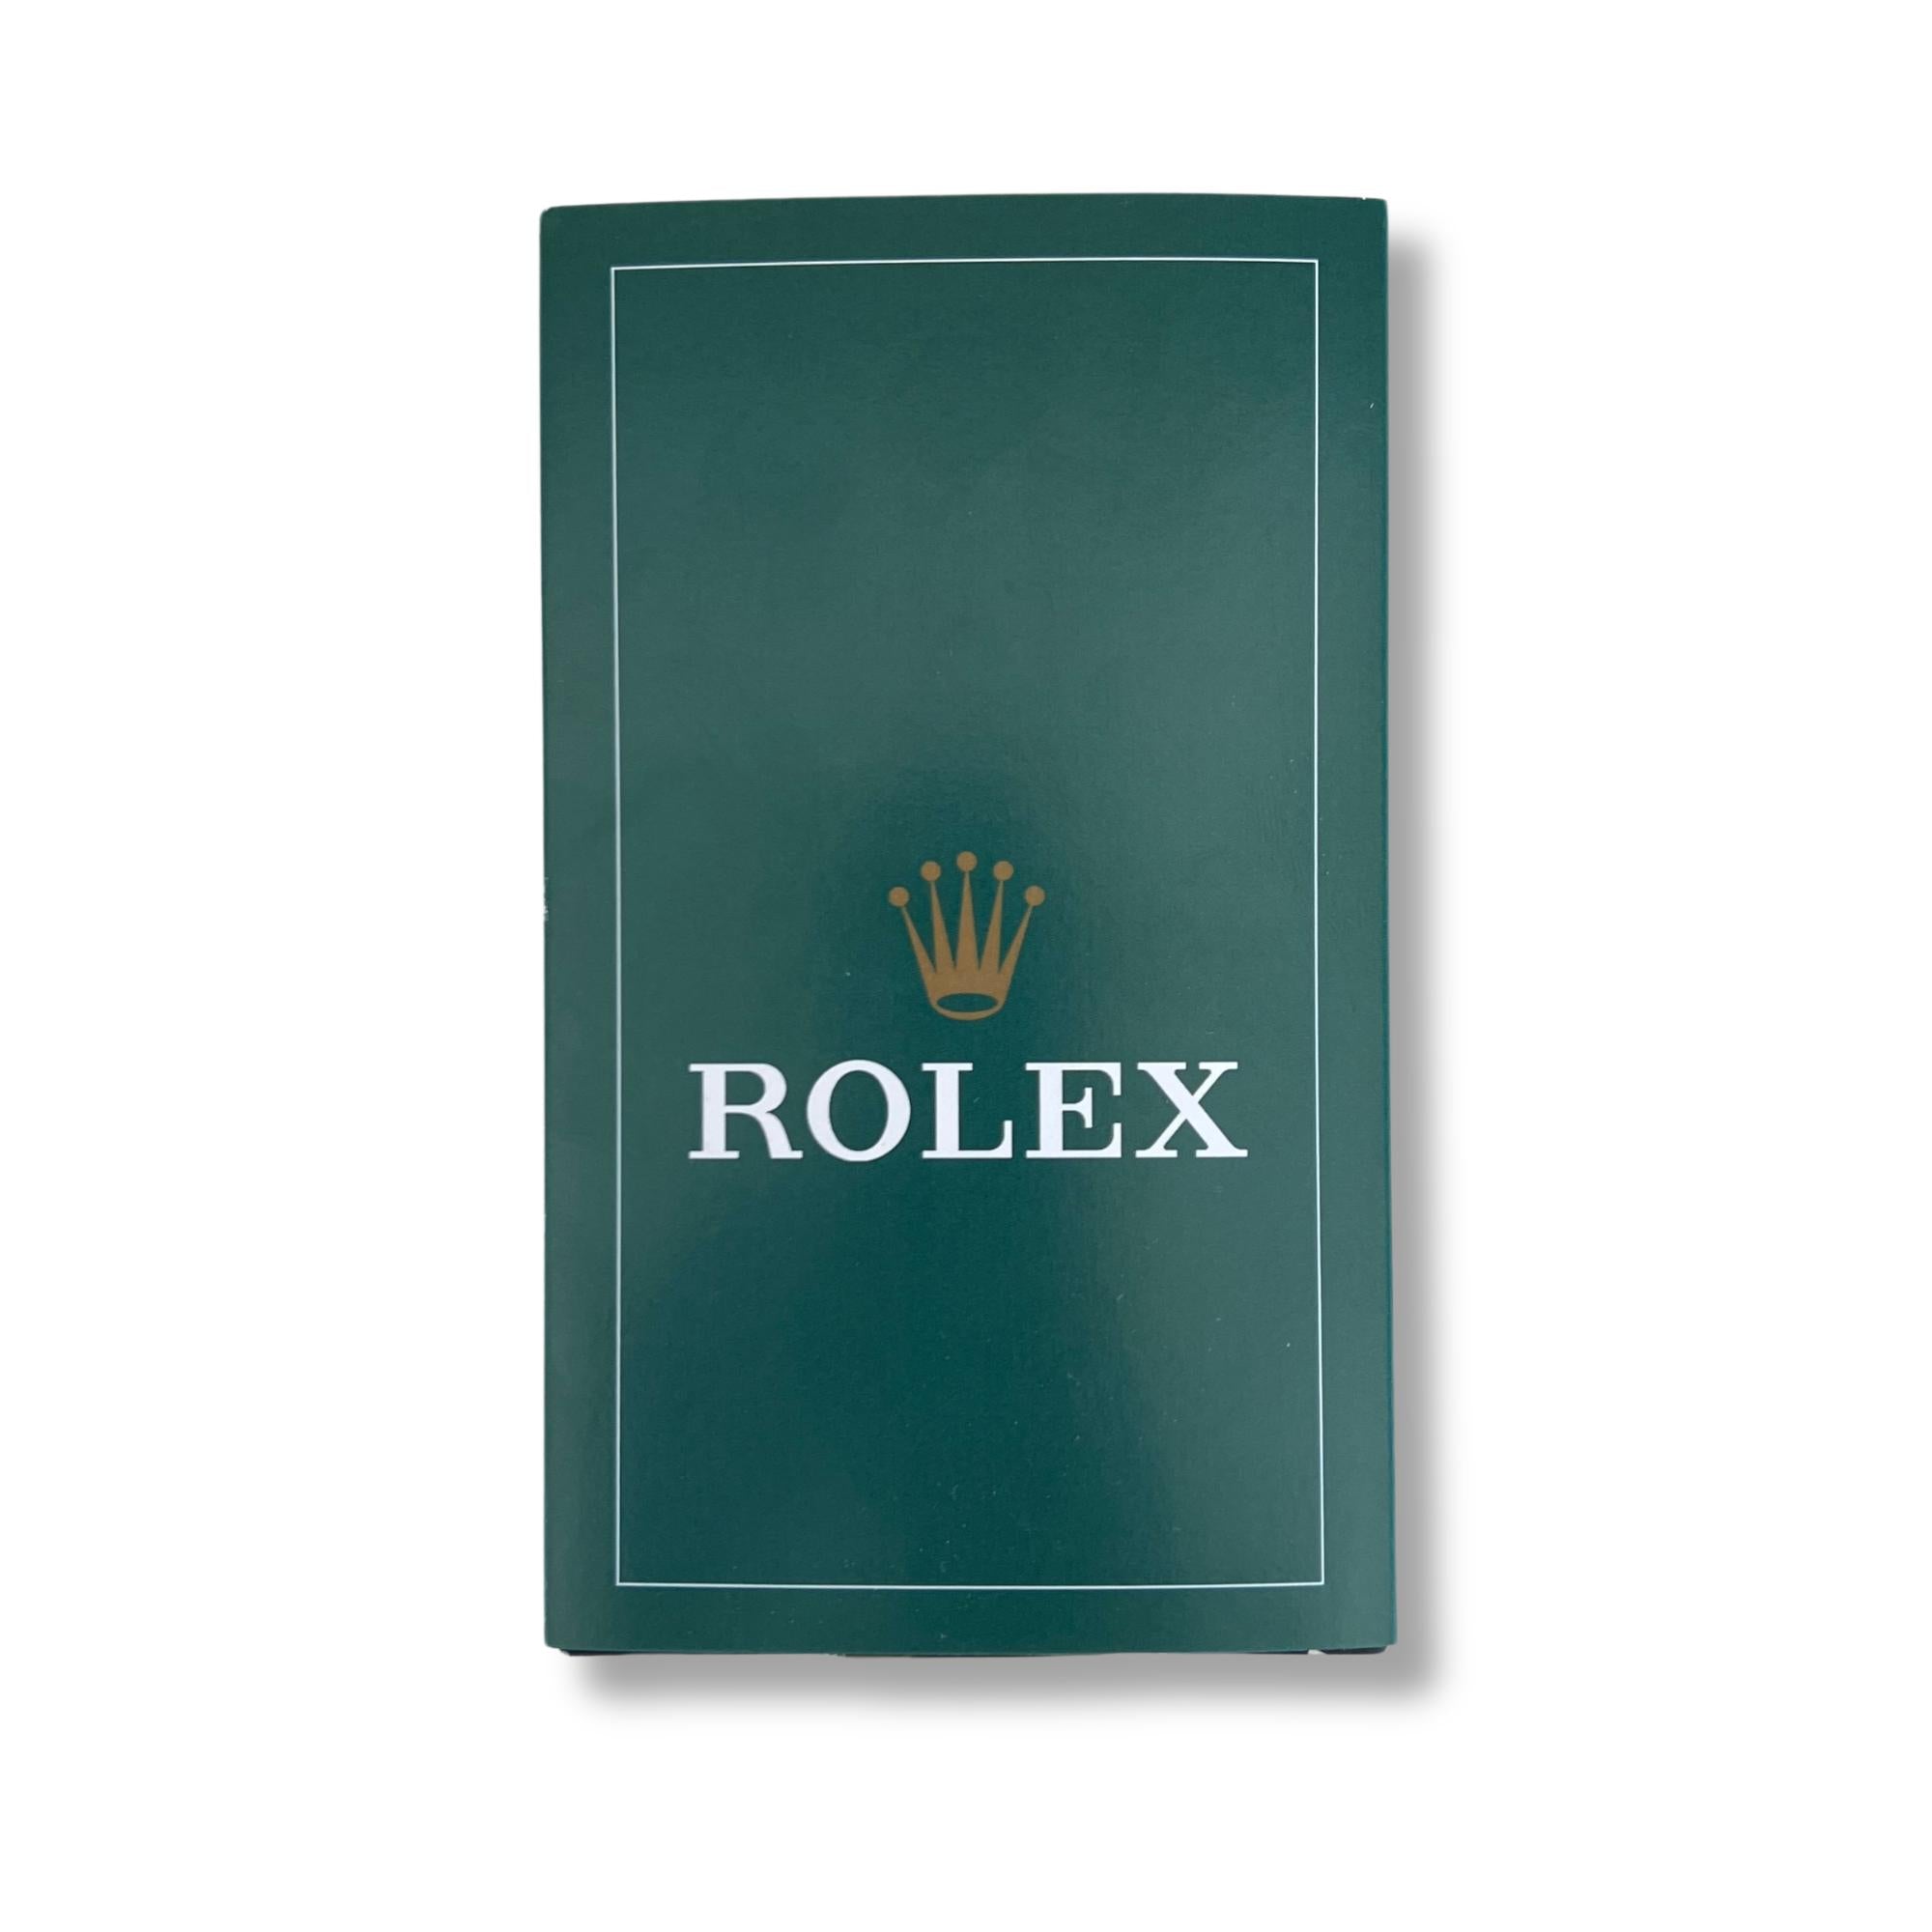 Eat A Dick - Fake Rolex Box